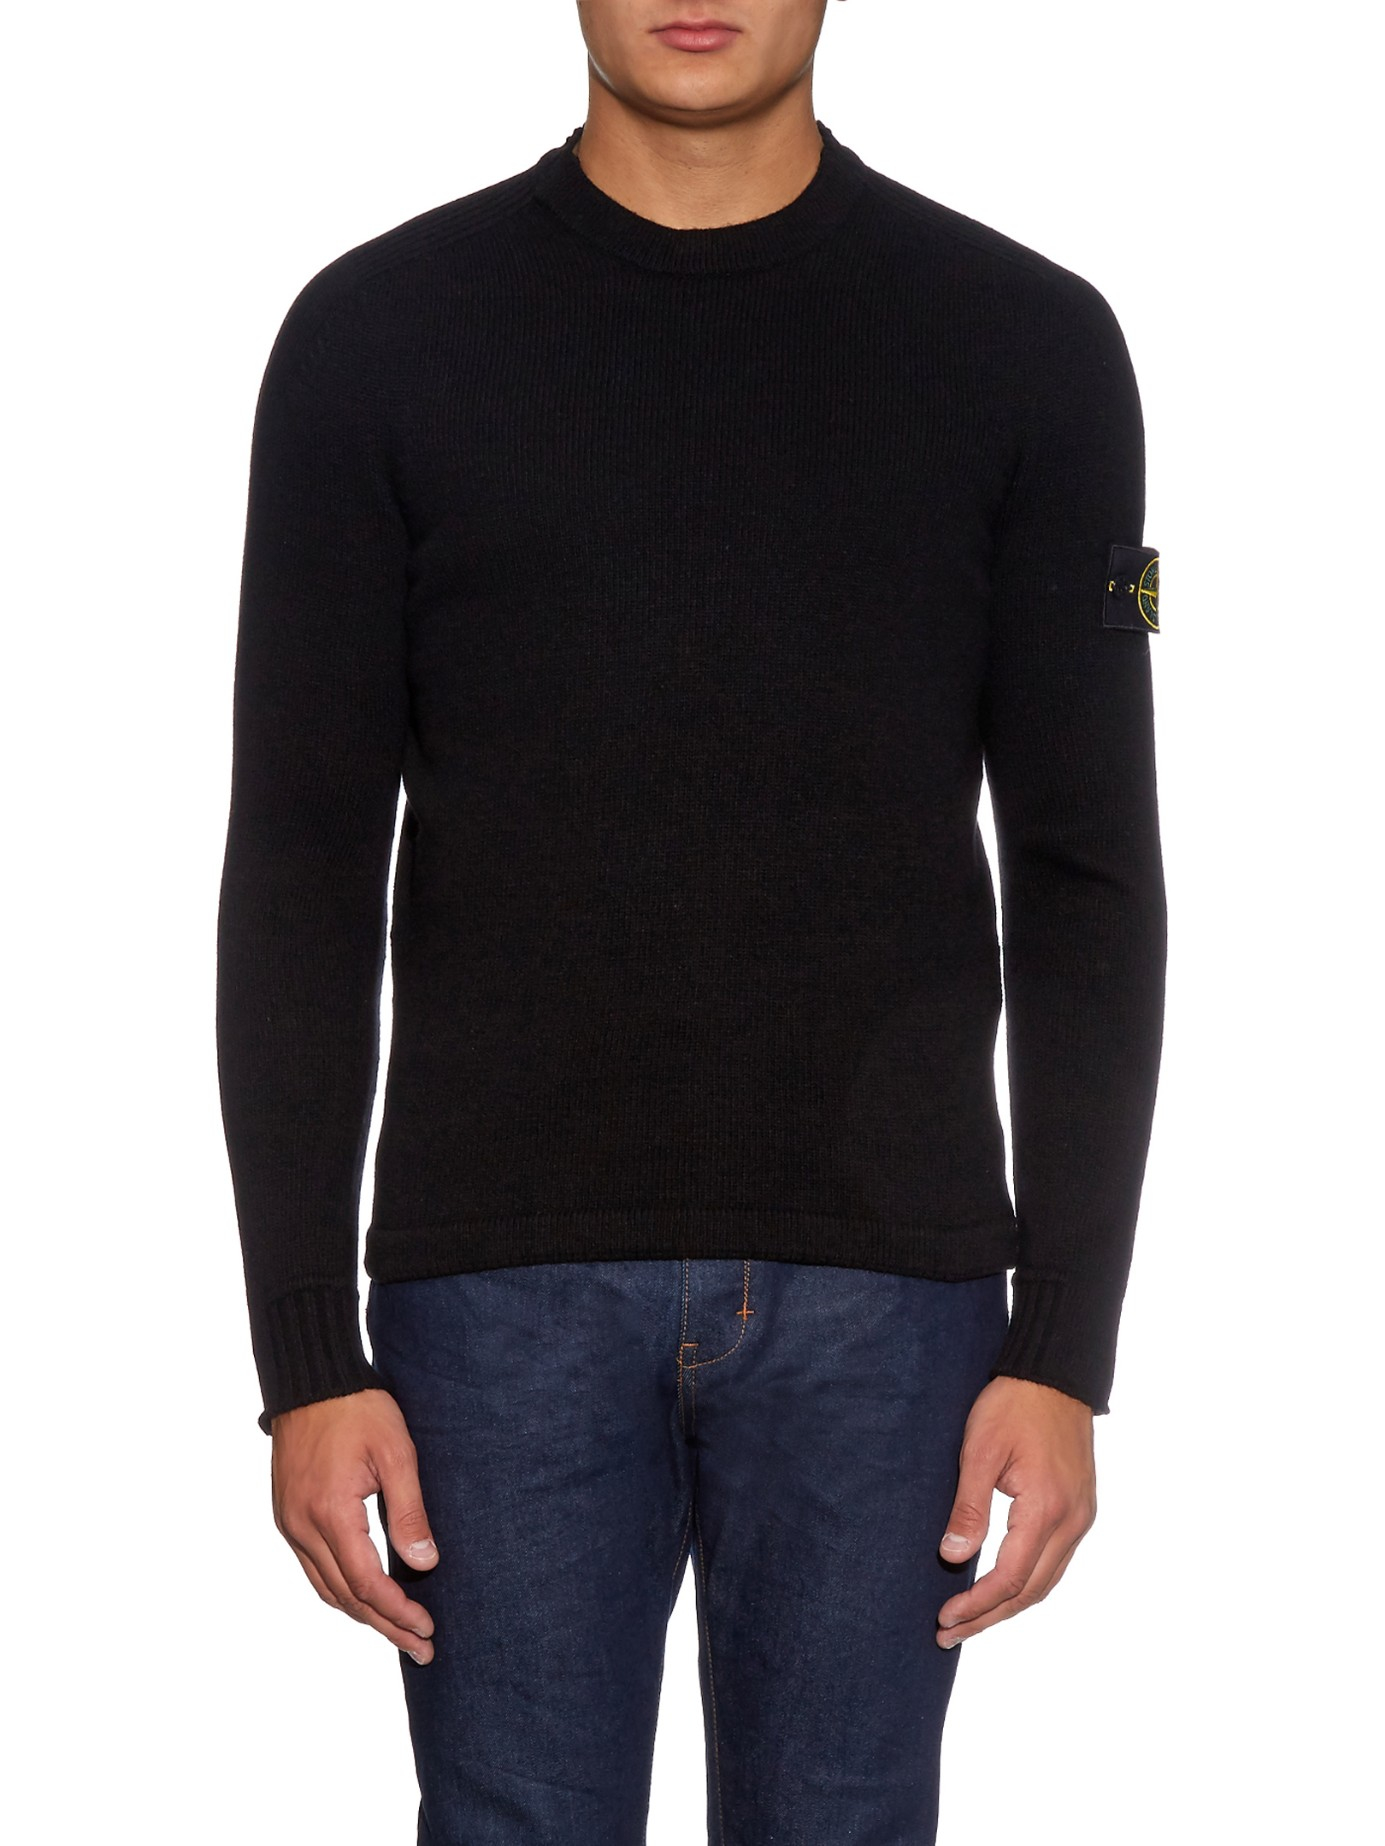 Stone Island Crew-Neck Wool-Blend Sweater in Black for Men - Lyst